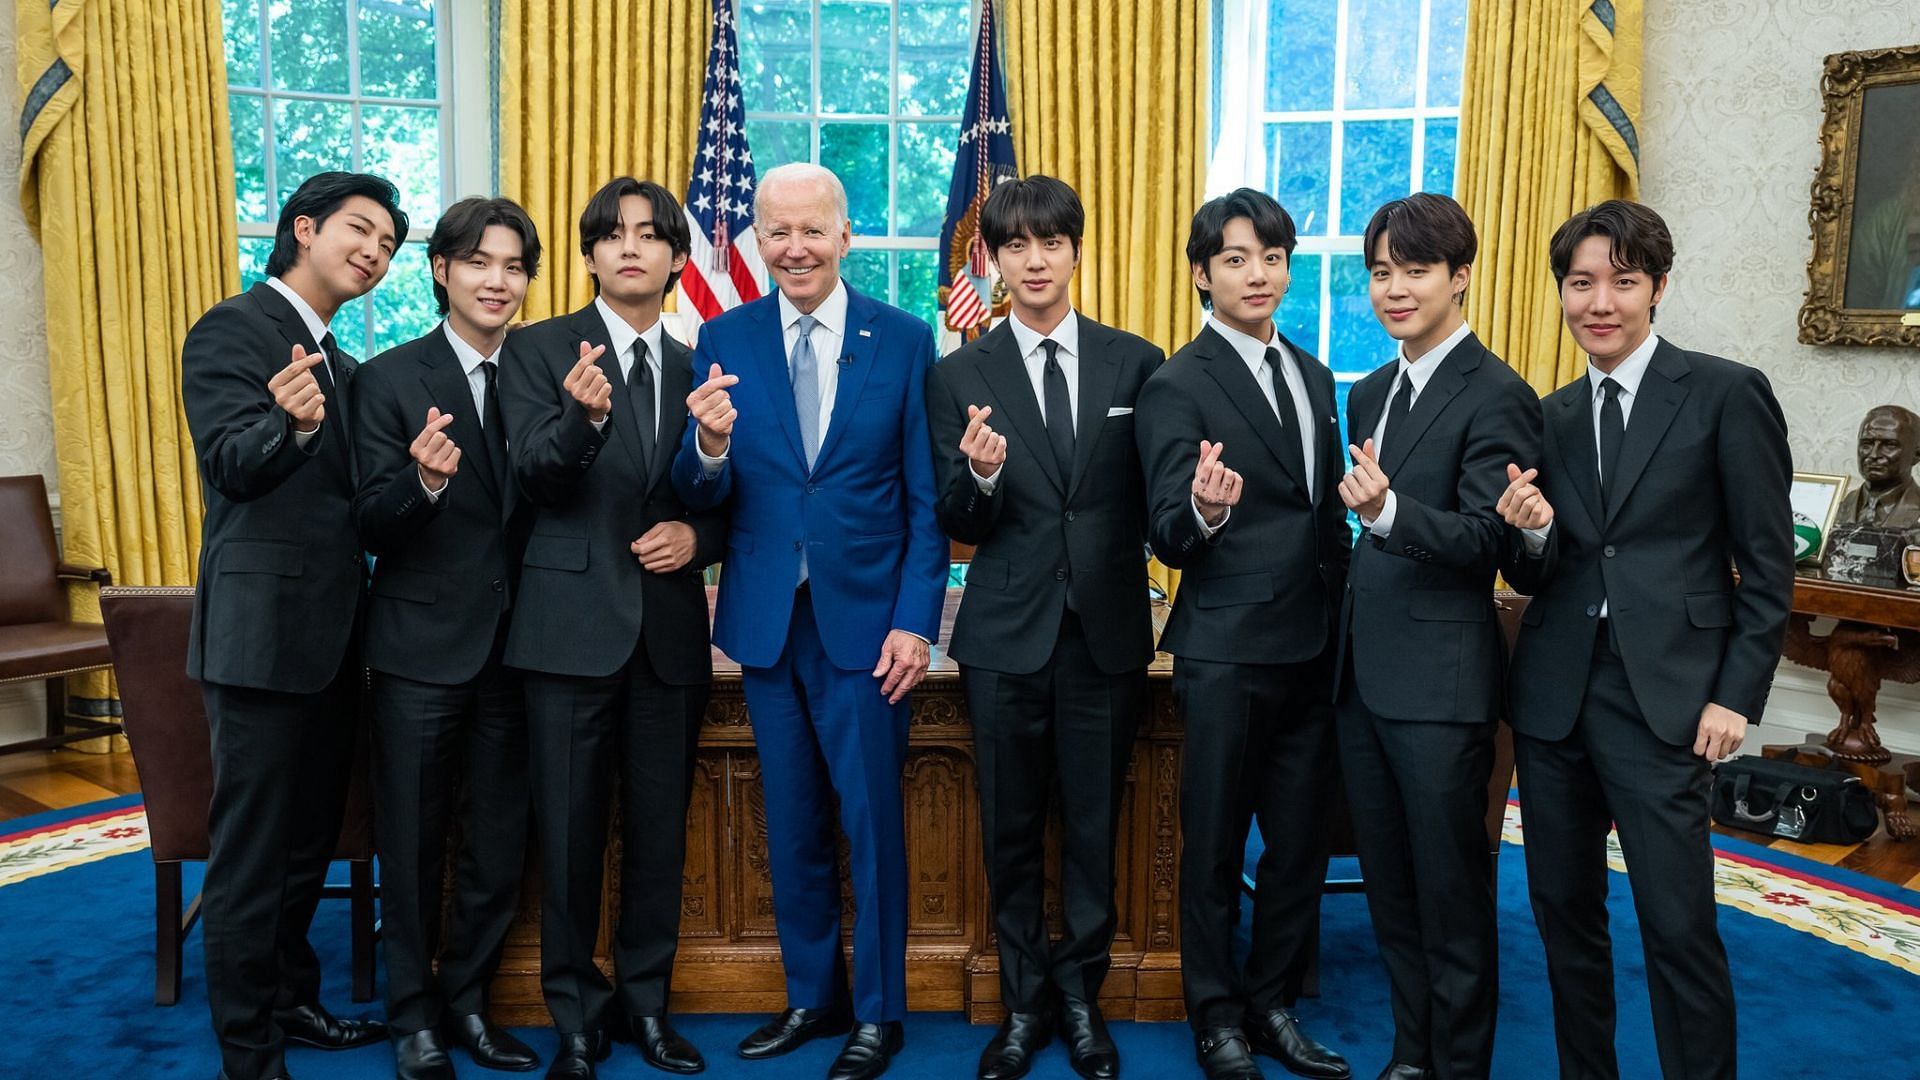 K-pop artists BTS with US President Joe Biden at The White House (Image via @bts_bighit/Twitter)